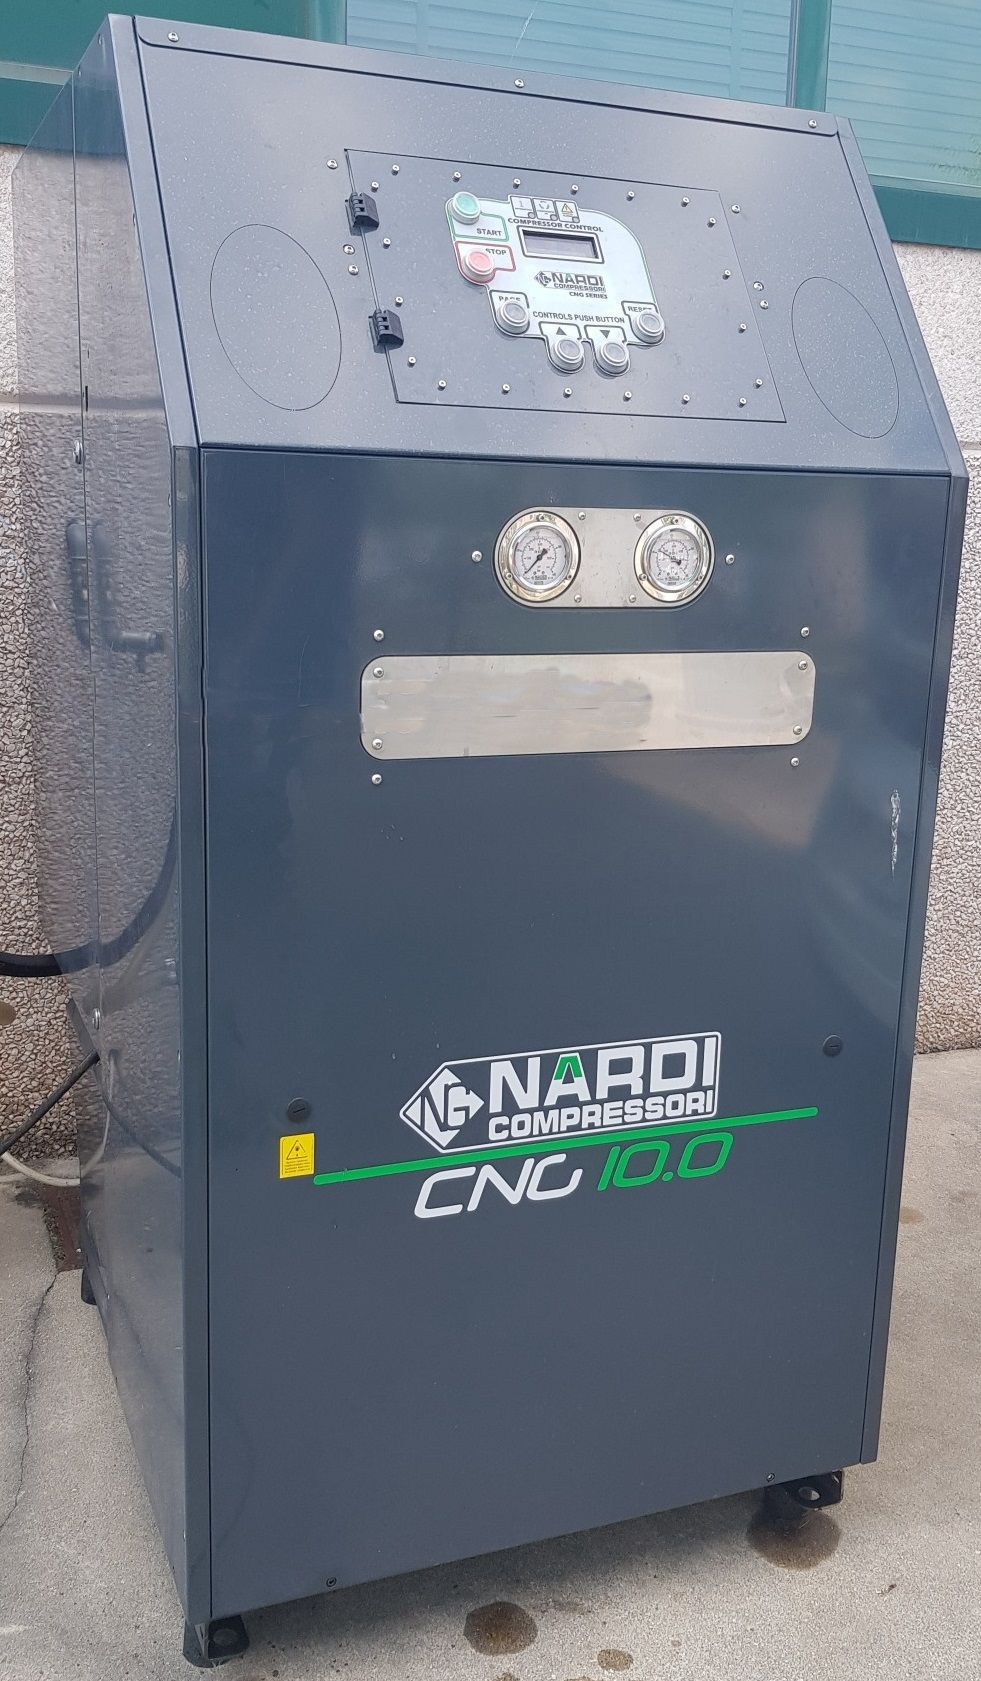 Dev-cng-10 compresseur de gaz naturel - nardi compressori france - débit: 36 nm3/h_0